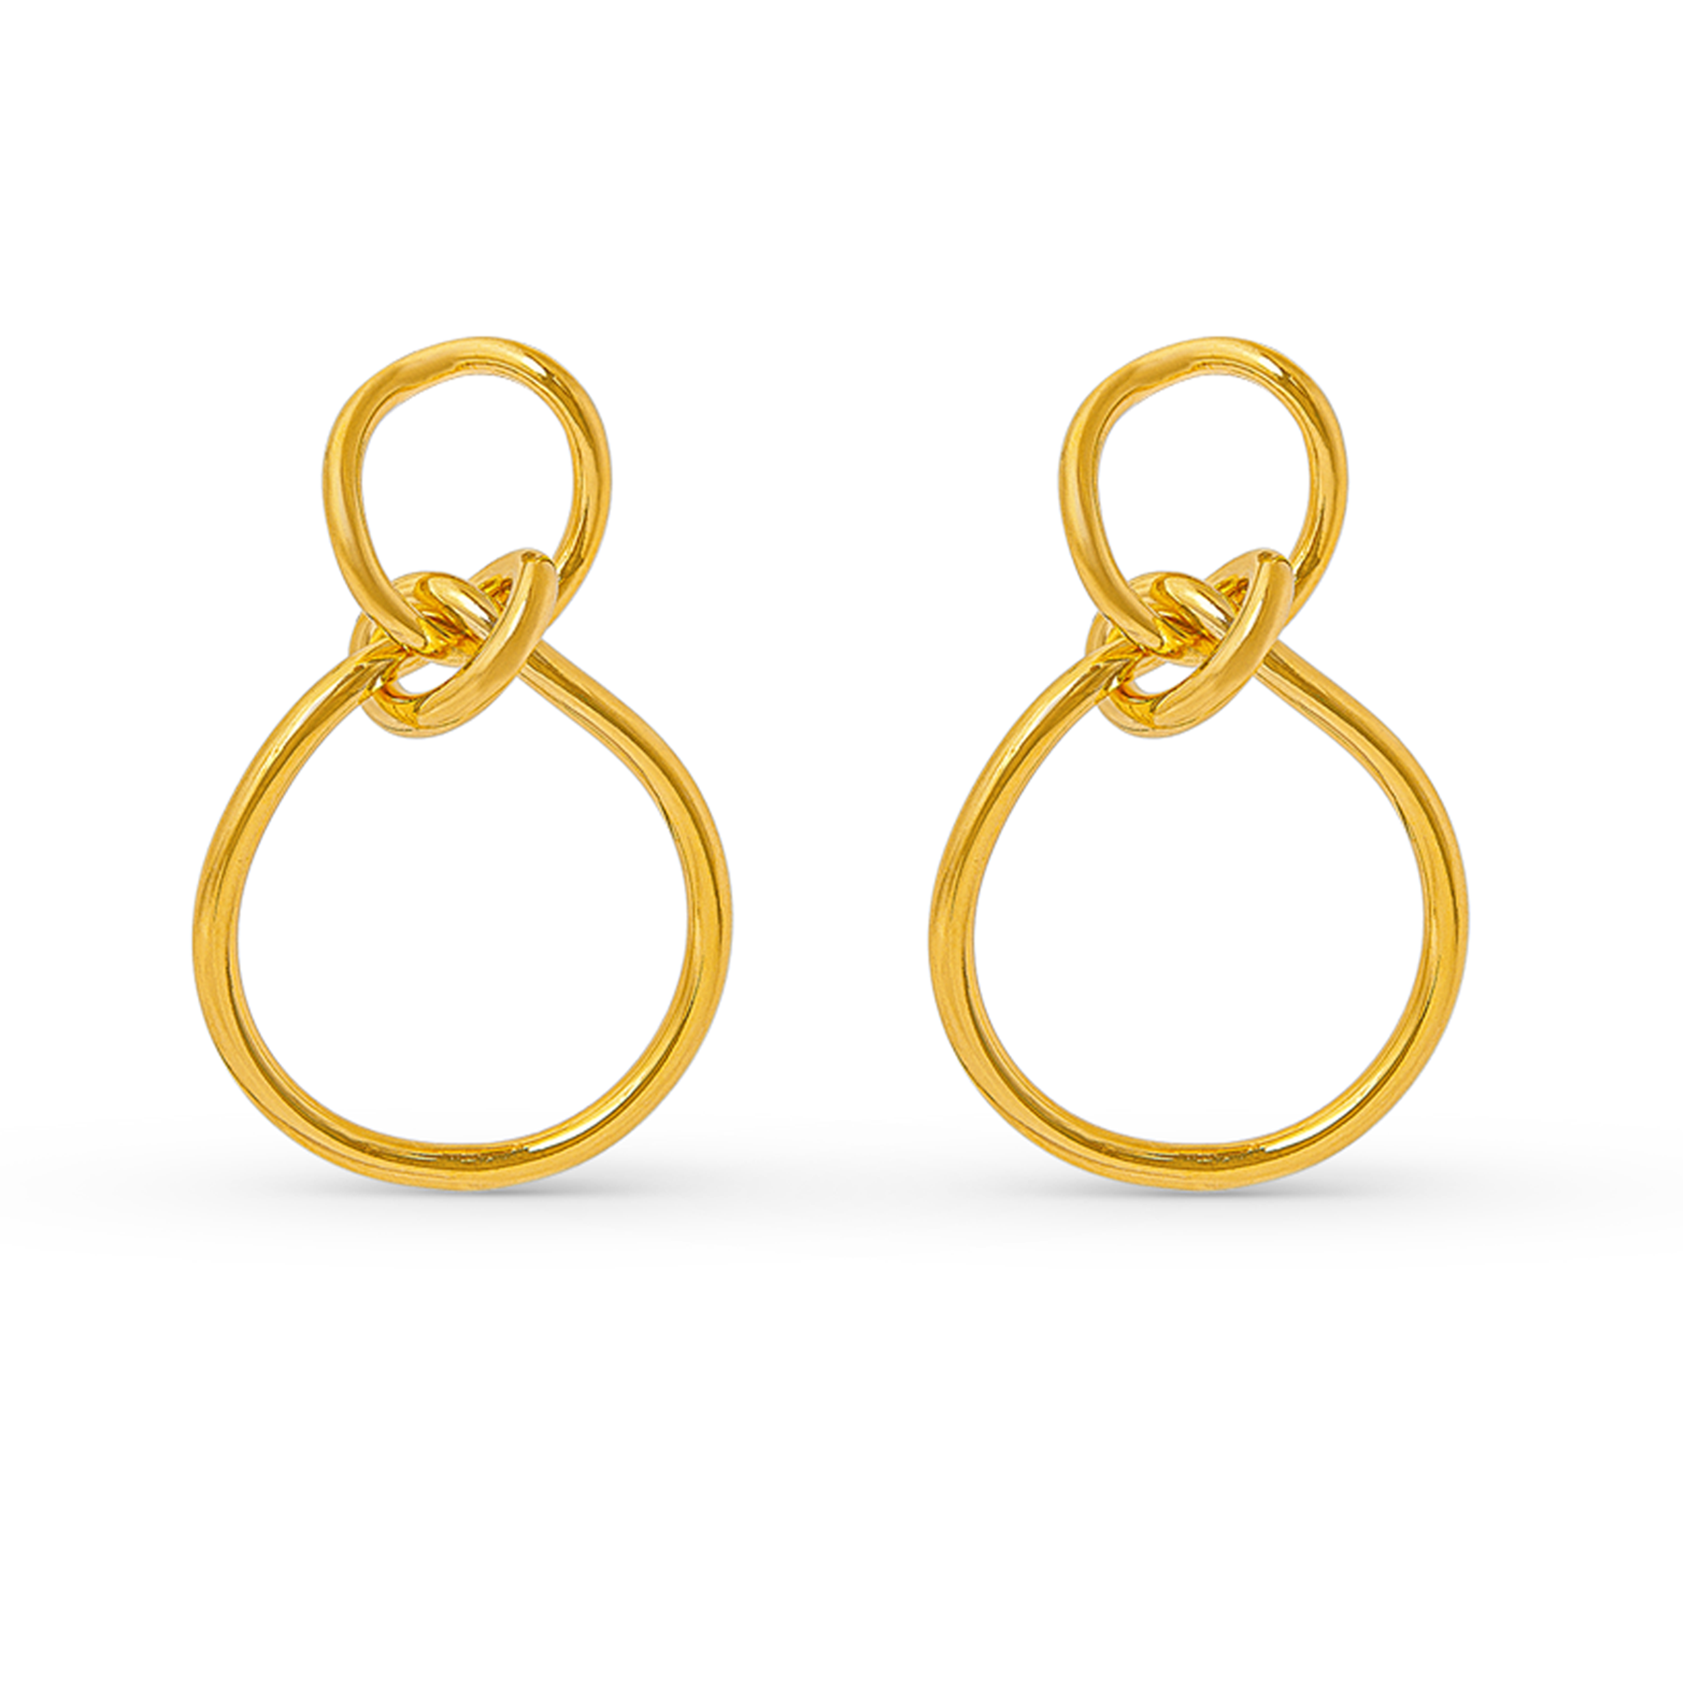 Statement Interlocking Knot Earrings - Gold - Orleia London